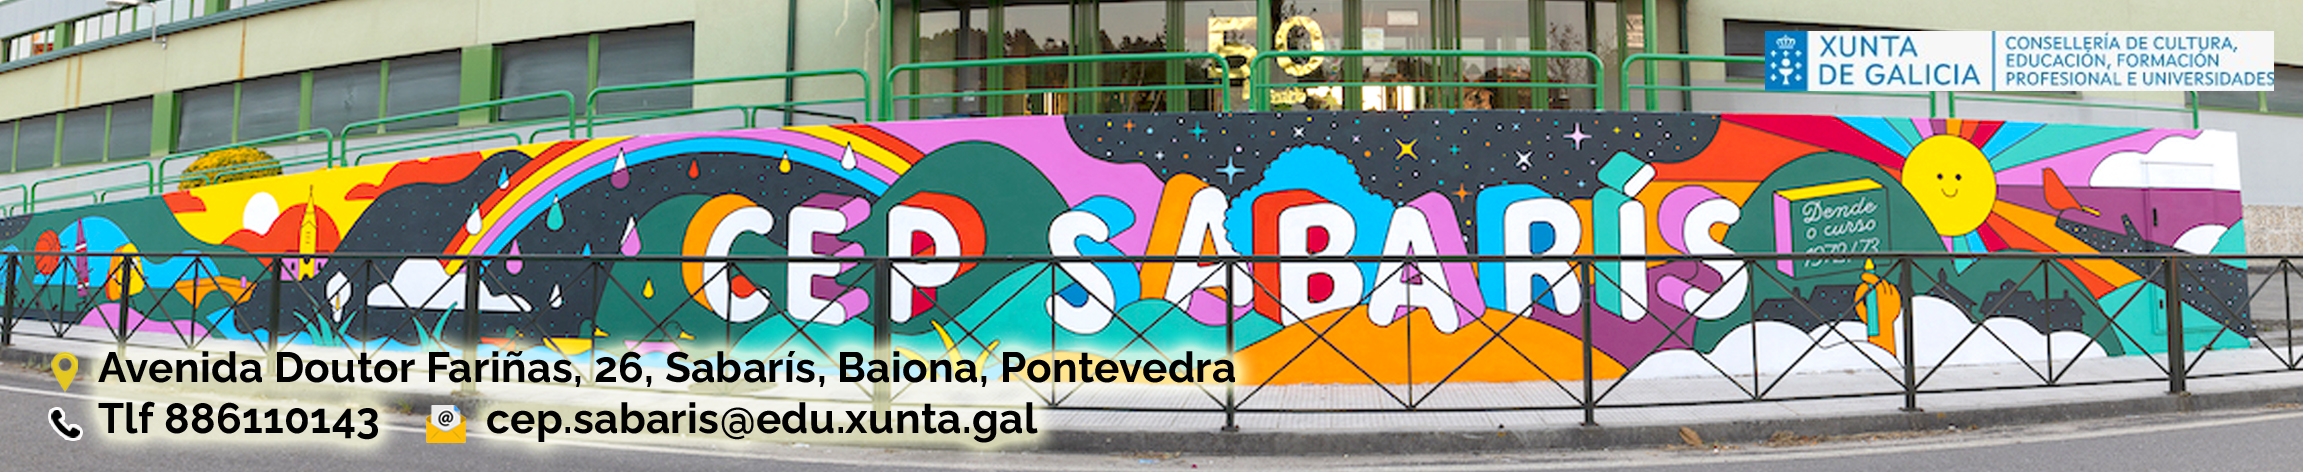 Banner CEP Sabarís